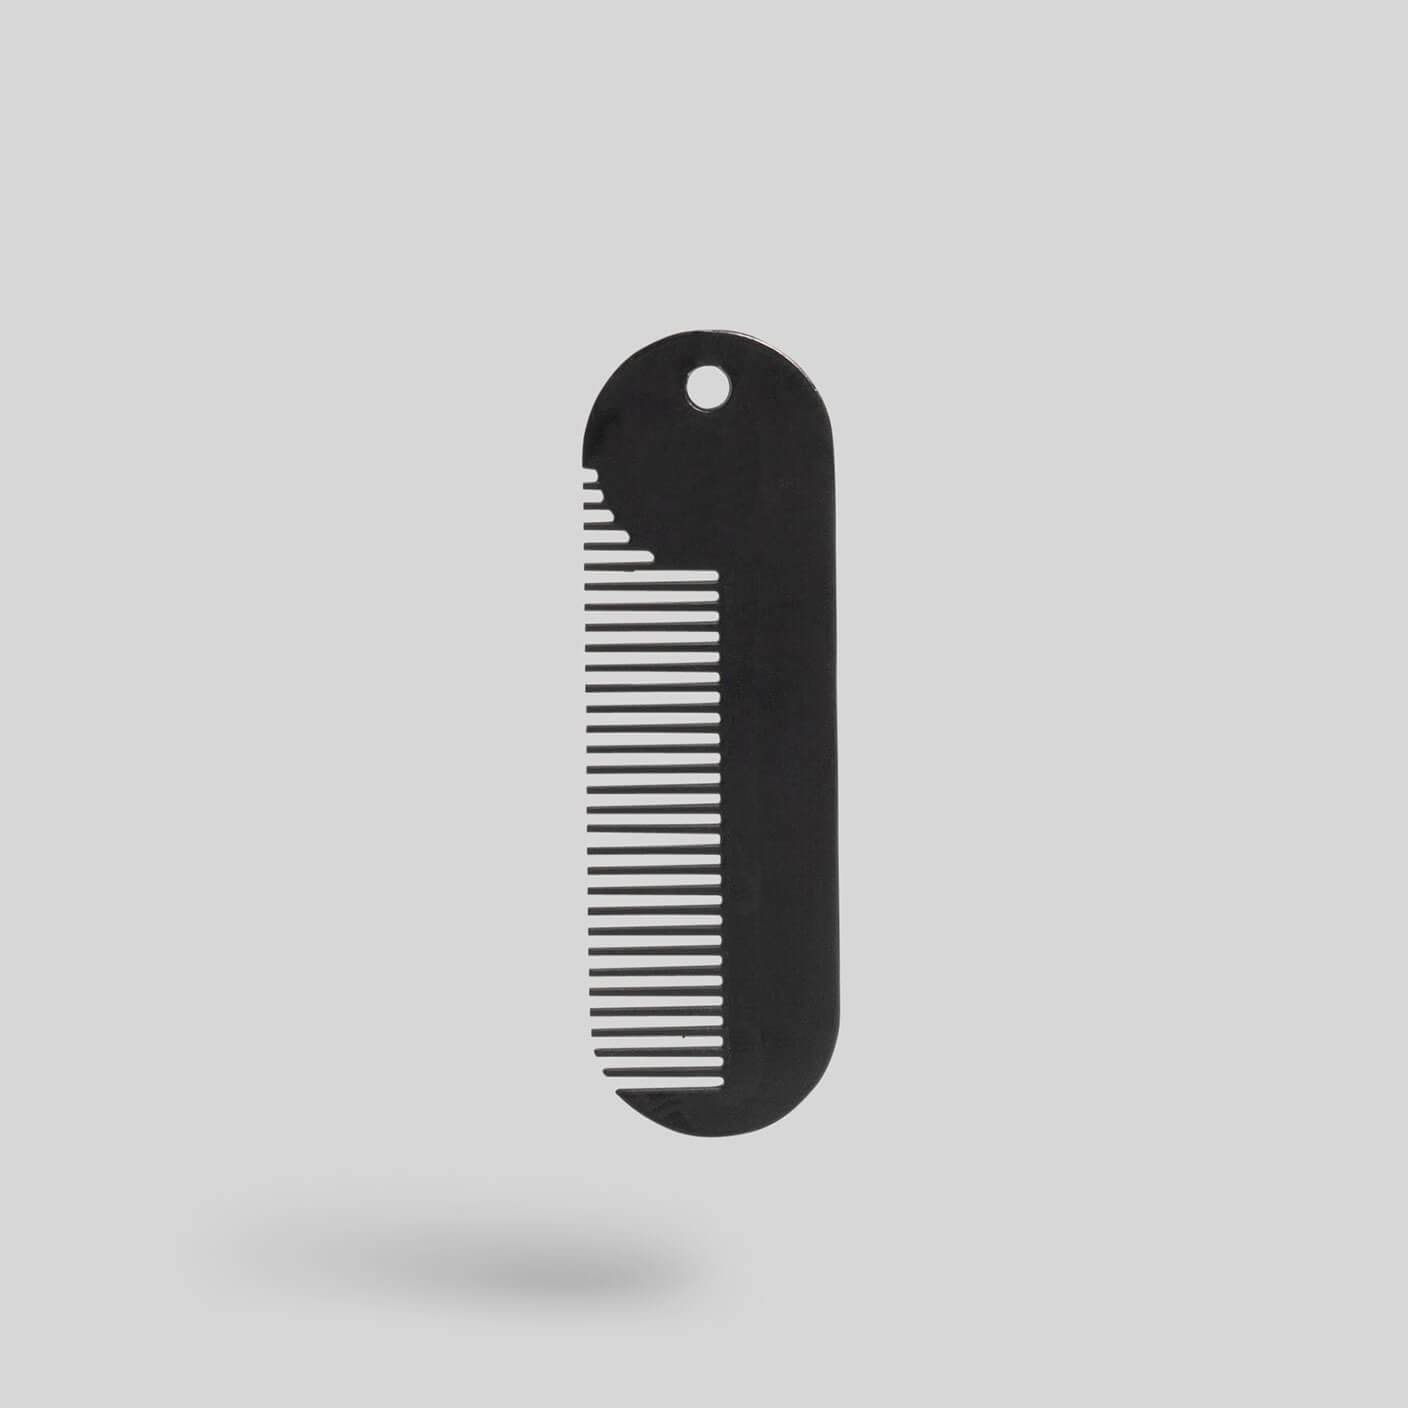 The Keychain Comb